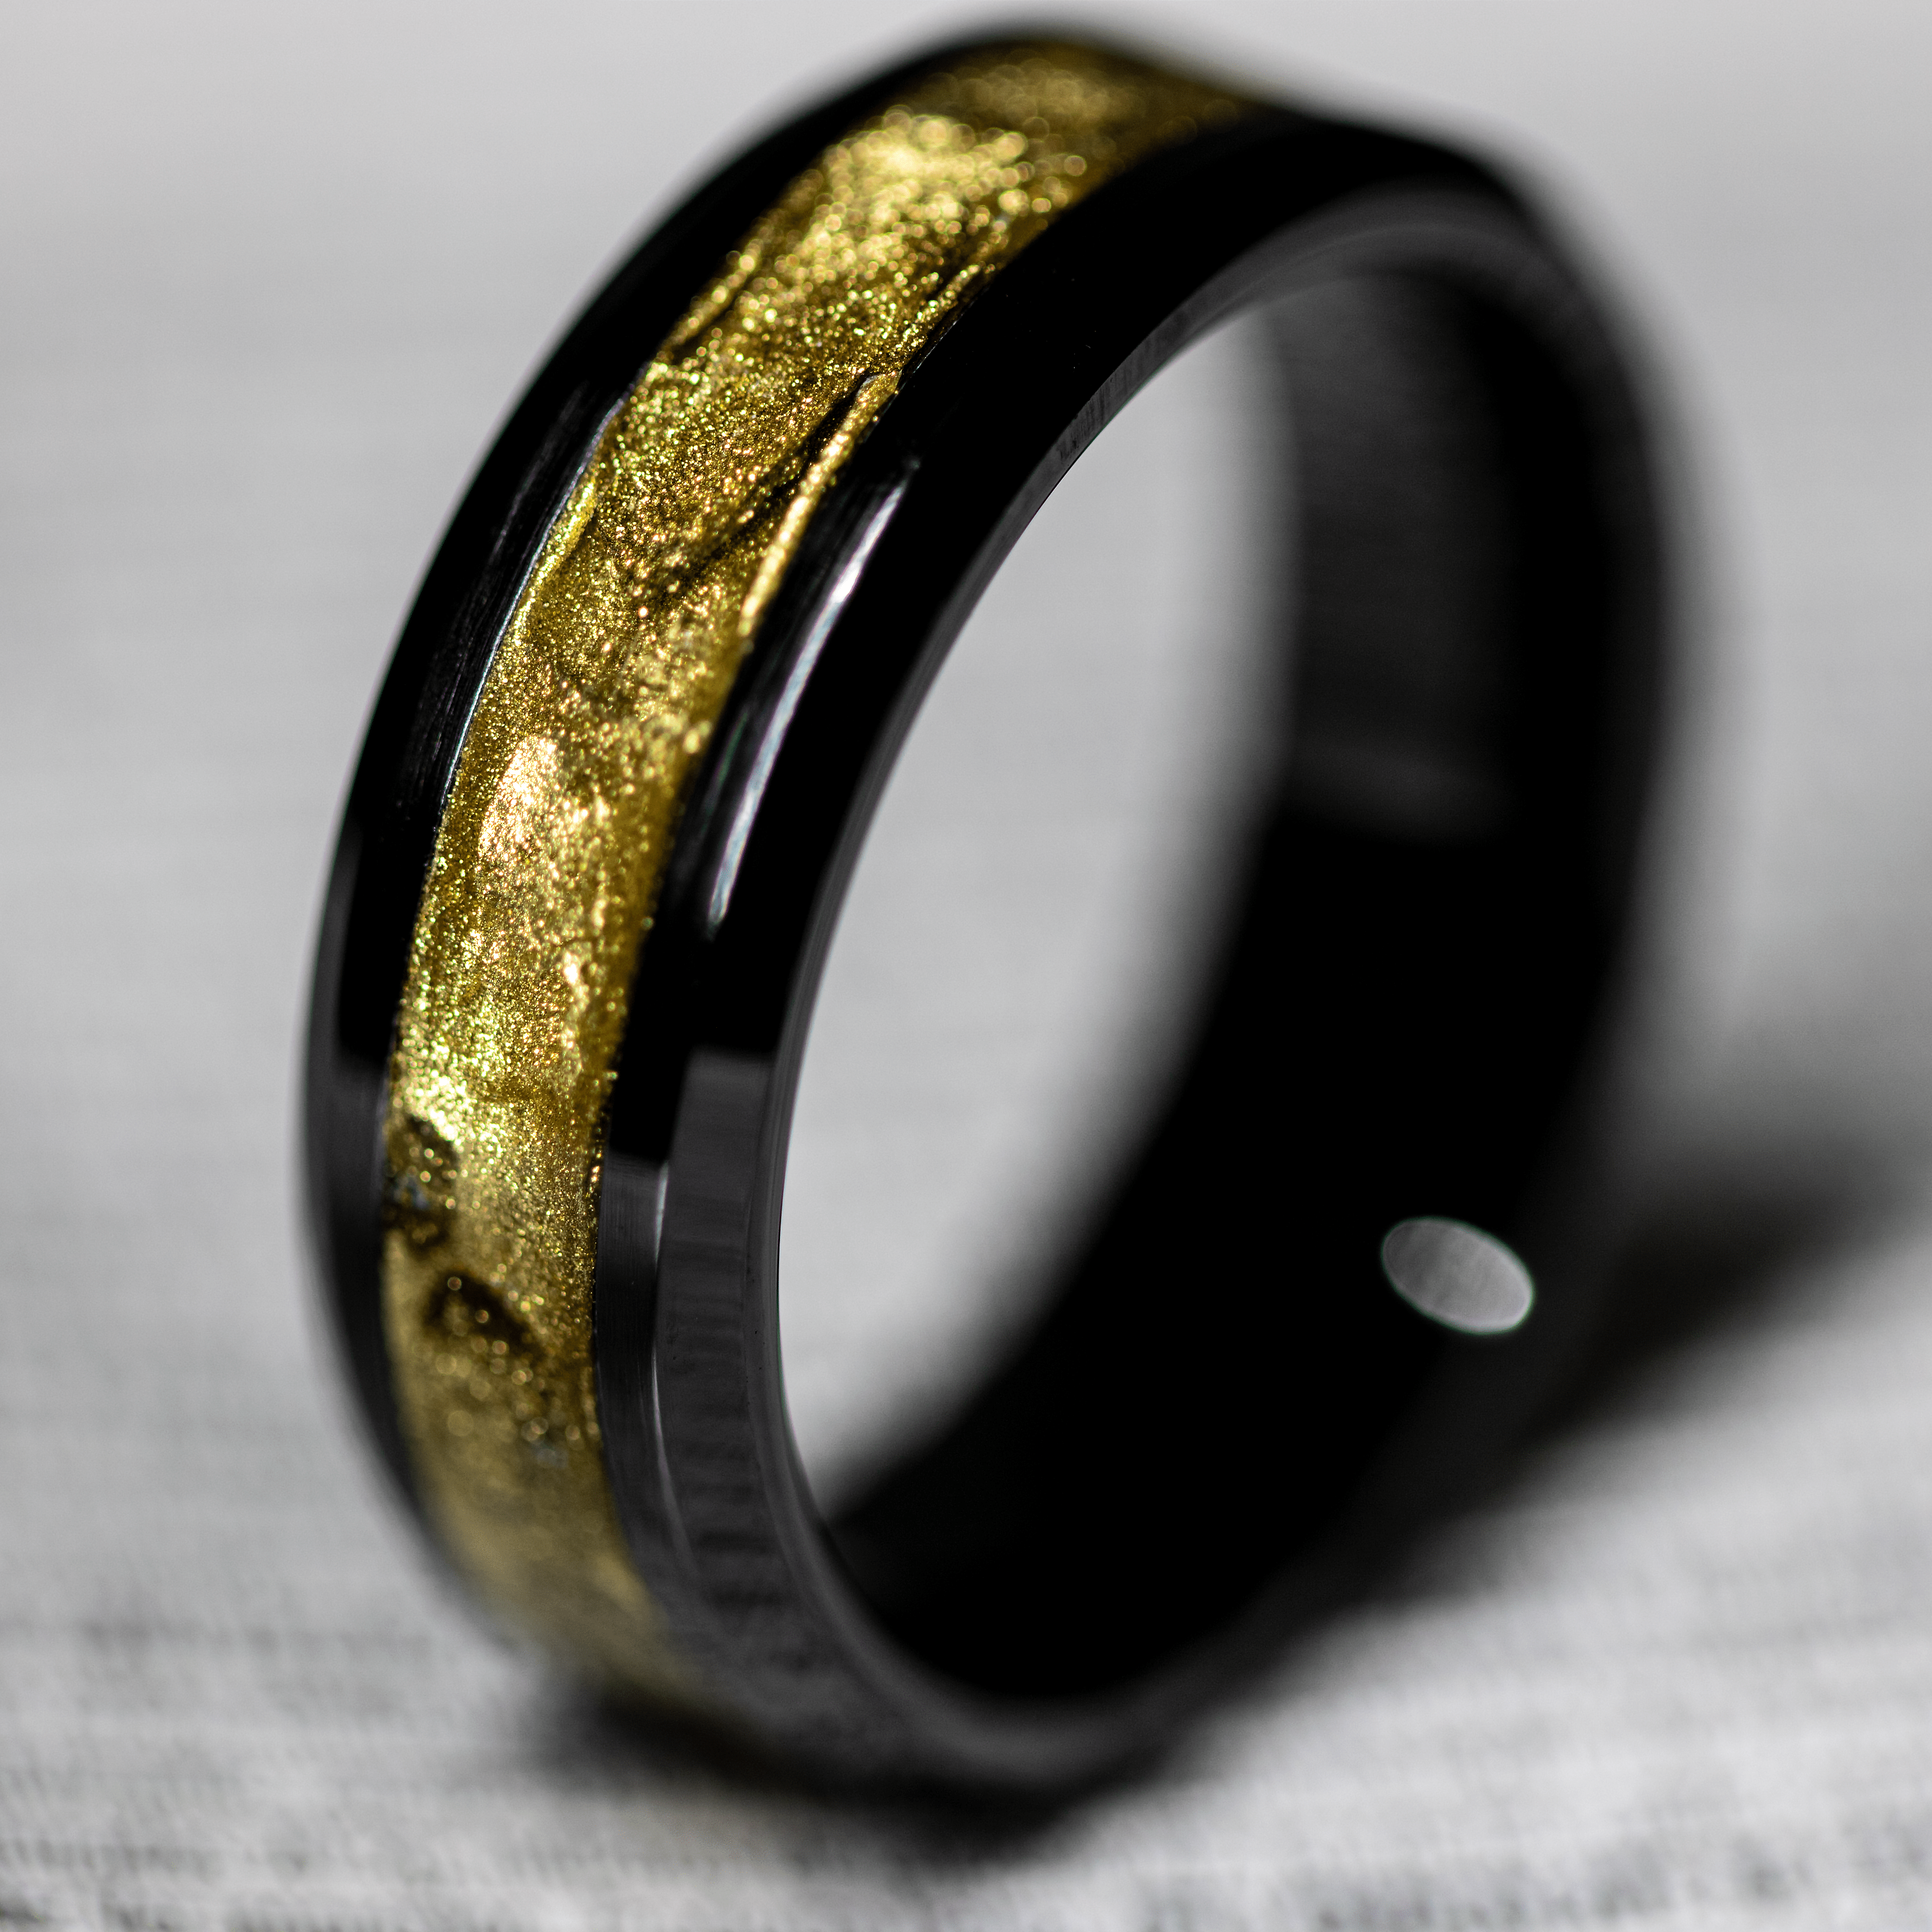 The golden river handmade silver ring